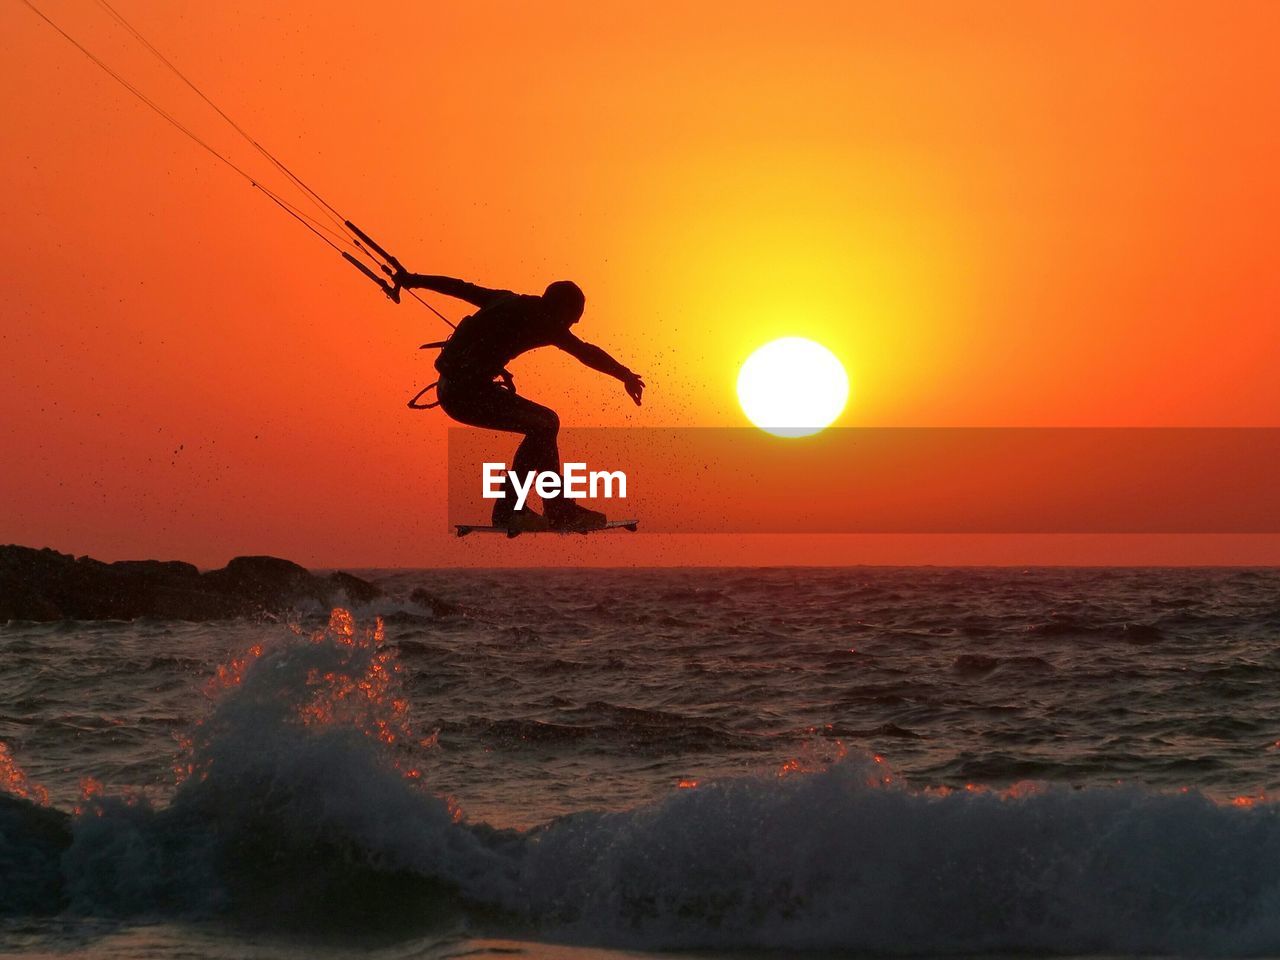 Silhouette man kiteboarding over sea against sky during sunset